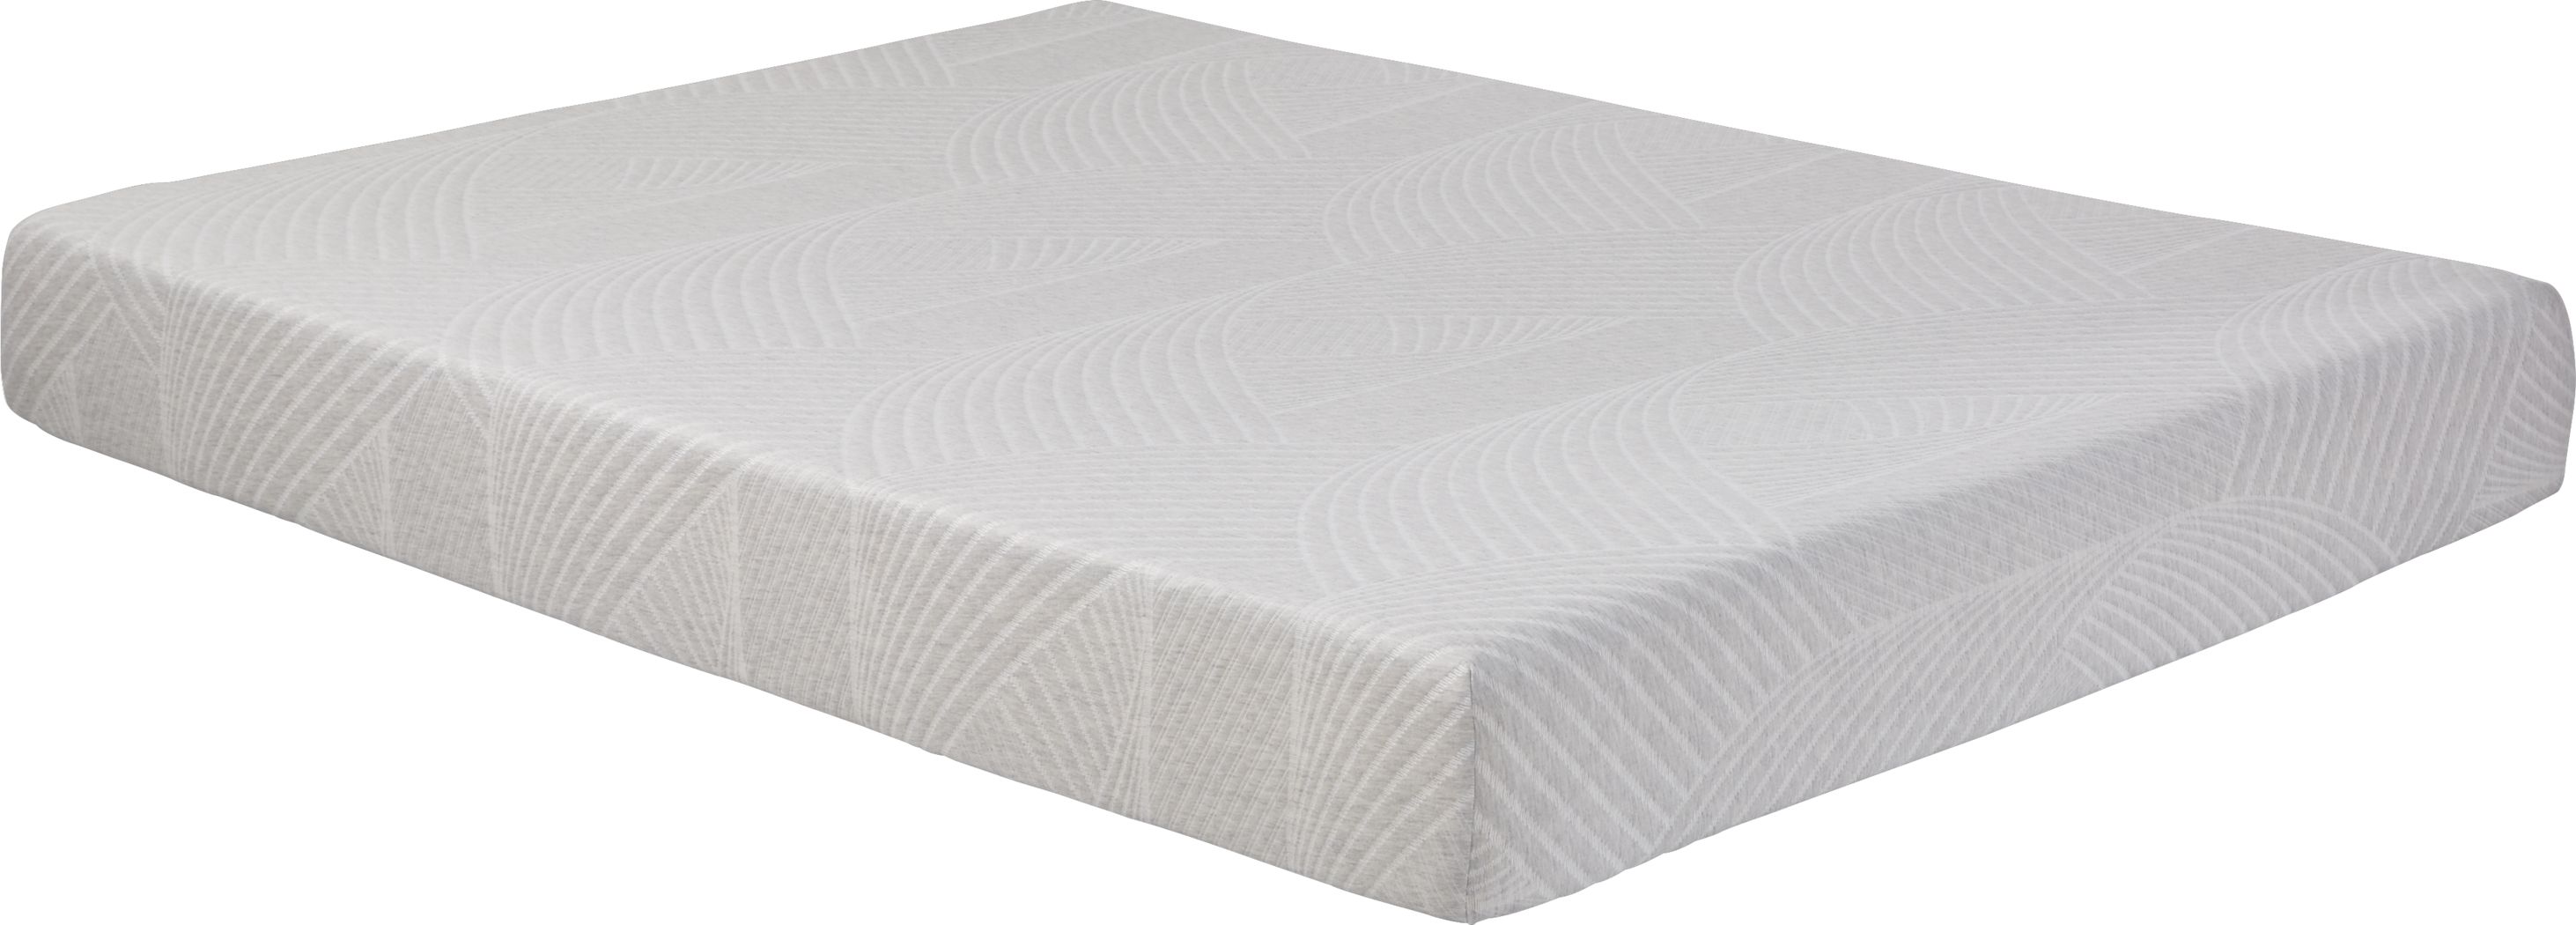 8 twin mattress made in usa